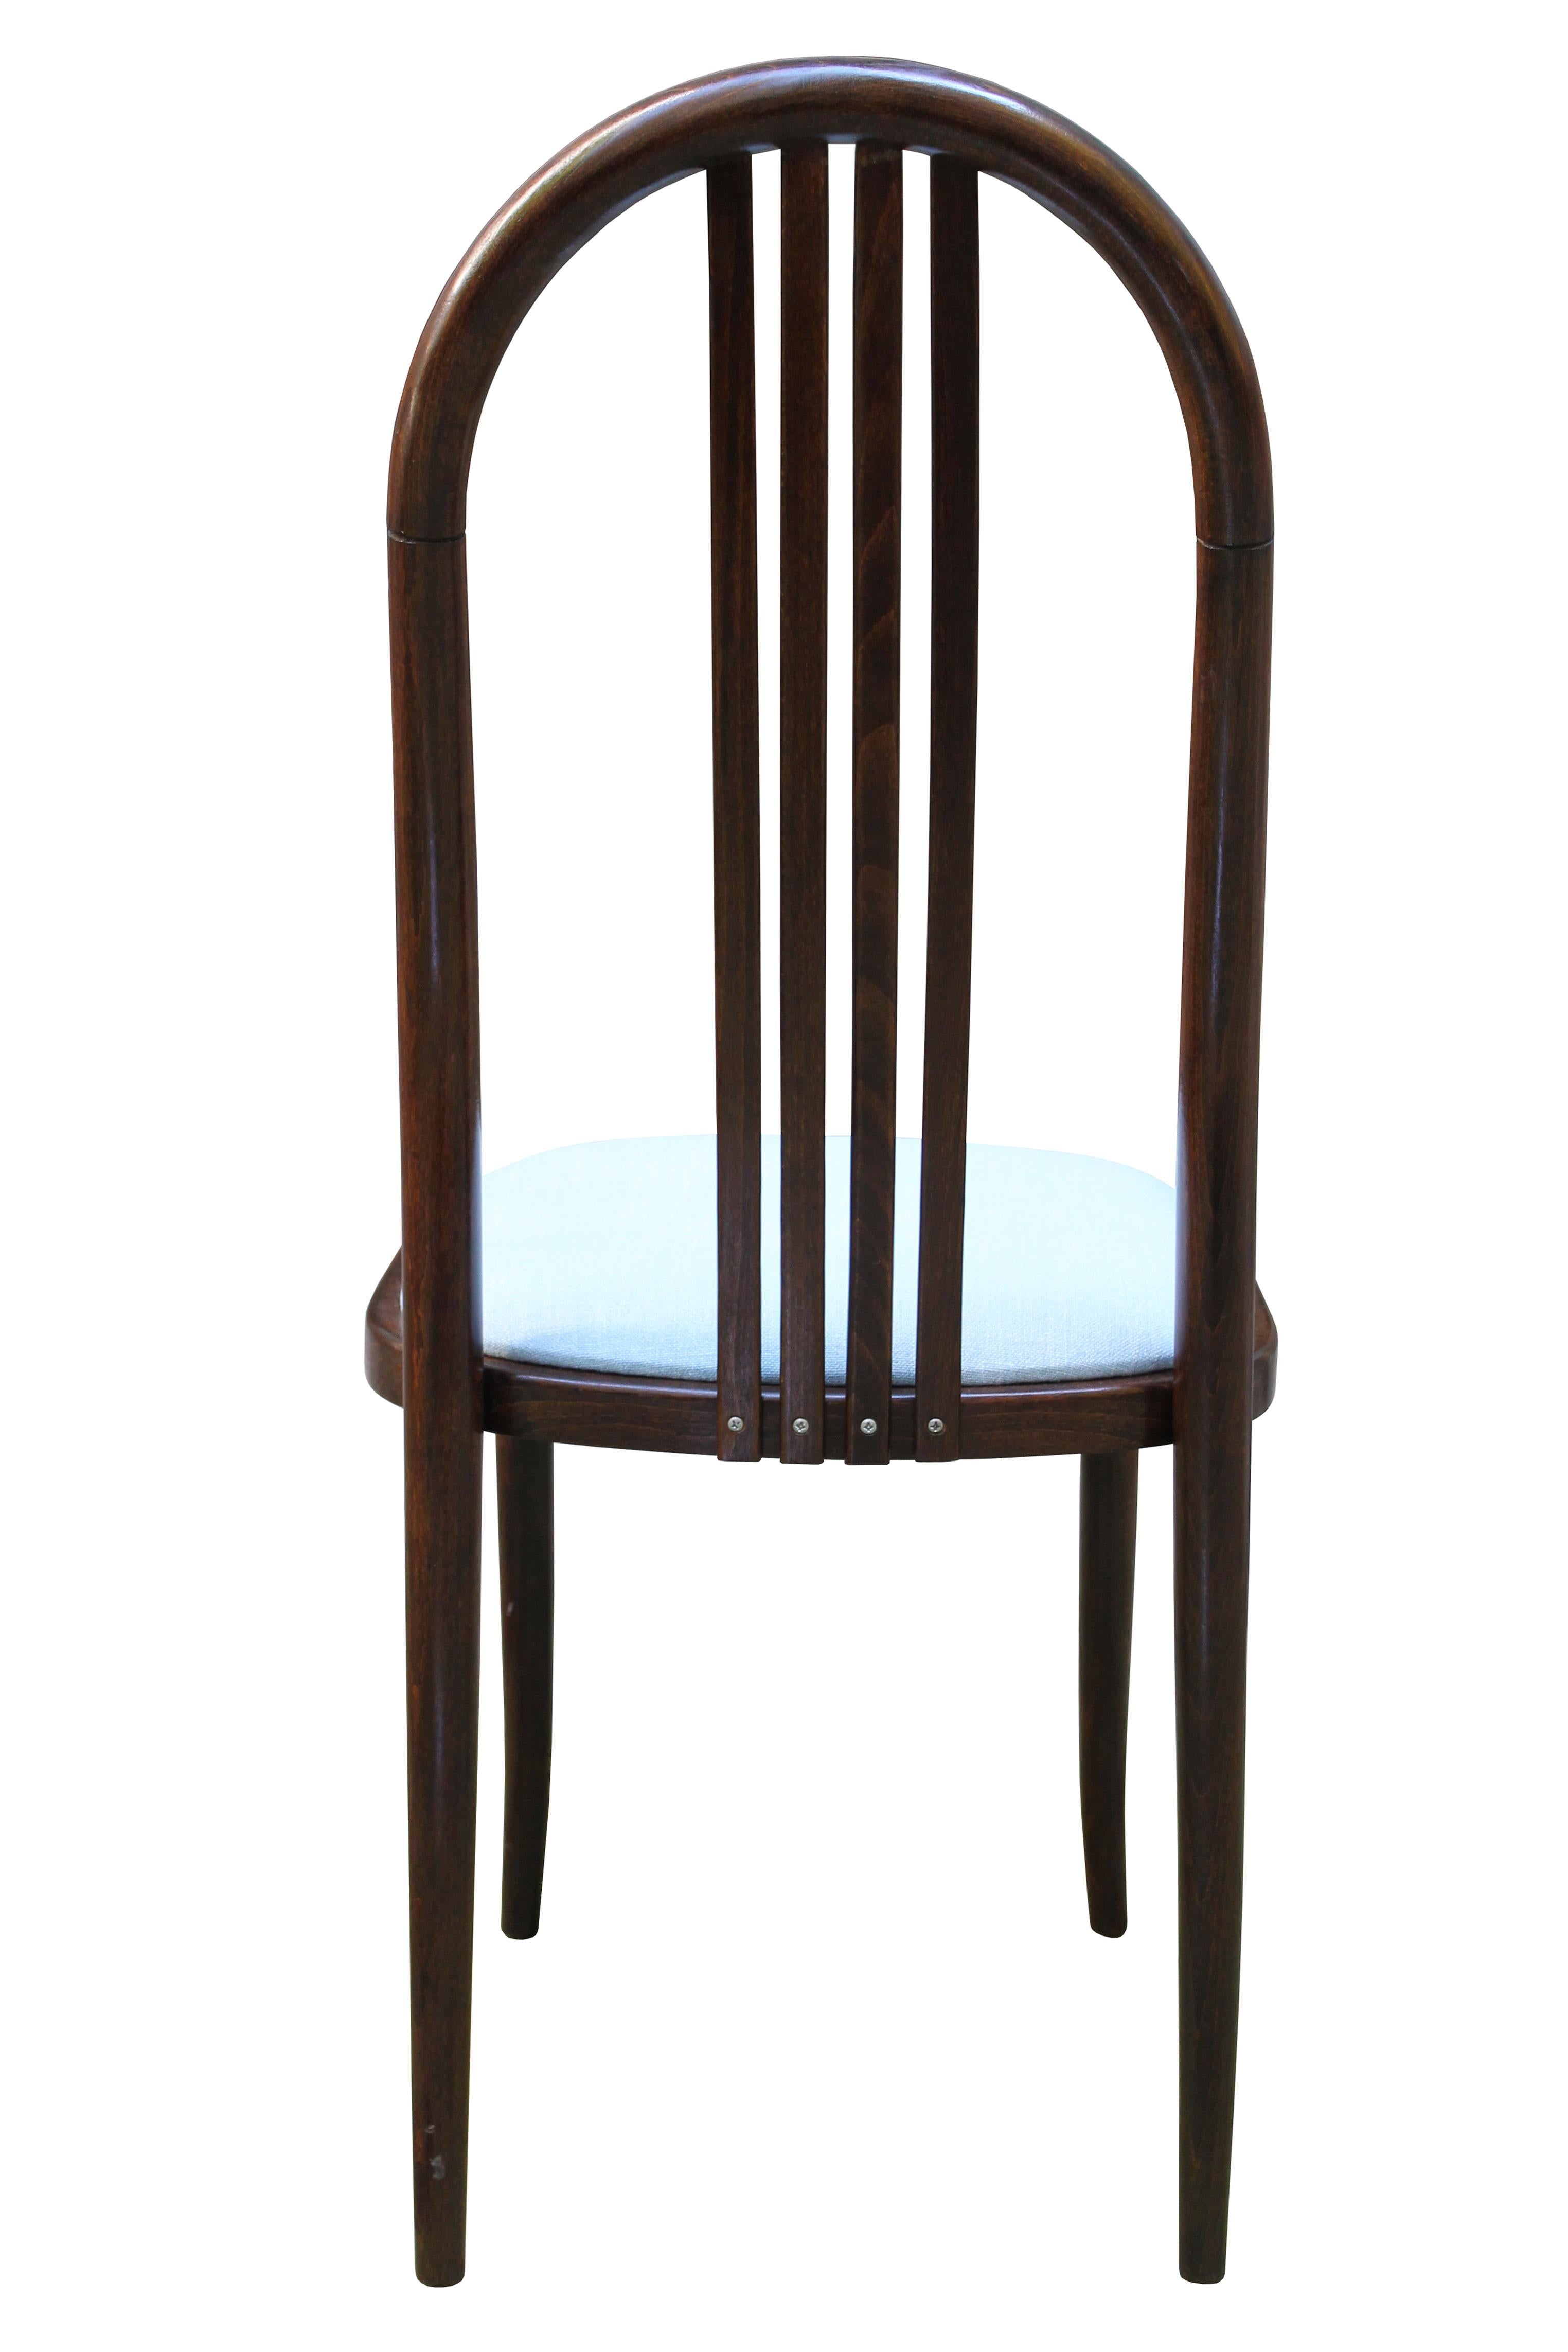 Post-Modern 1980's Postmodernist Chair Model No. 45 by Josef Macek for TON For Sale